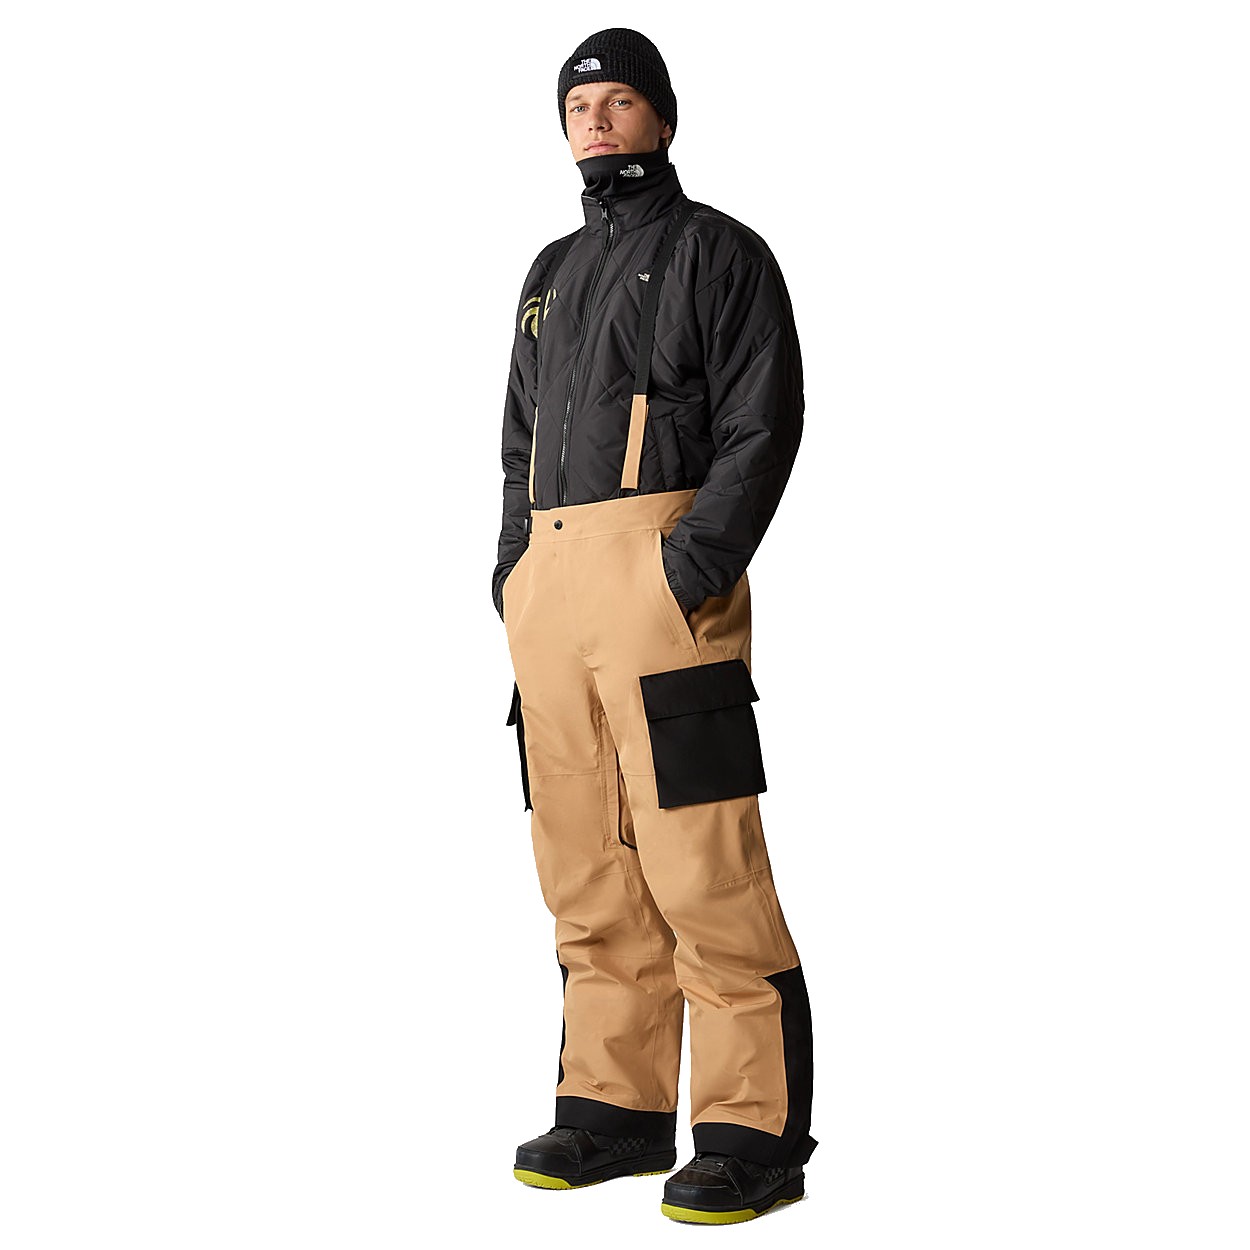 NWT Mens The North Face Ceptor Dryvent Waterproof Shell Ski Bibs Pants -  Brown | eBay